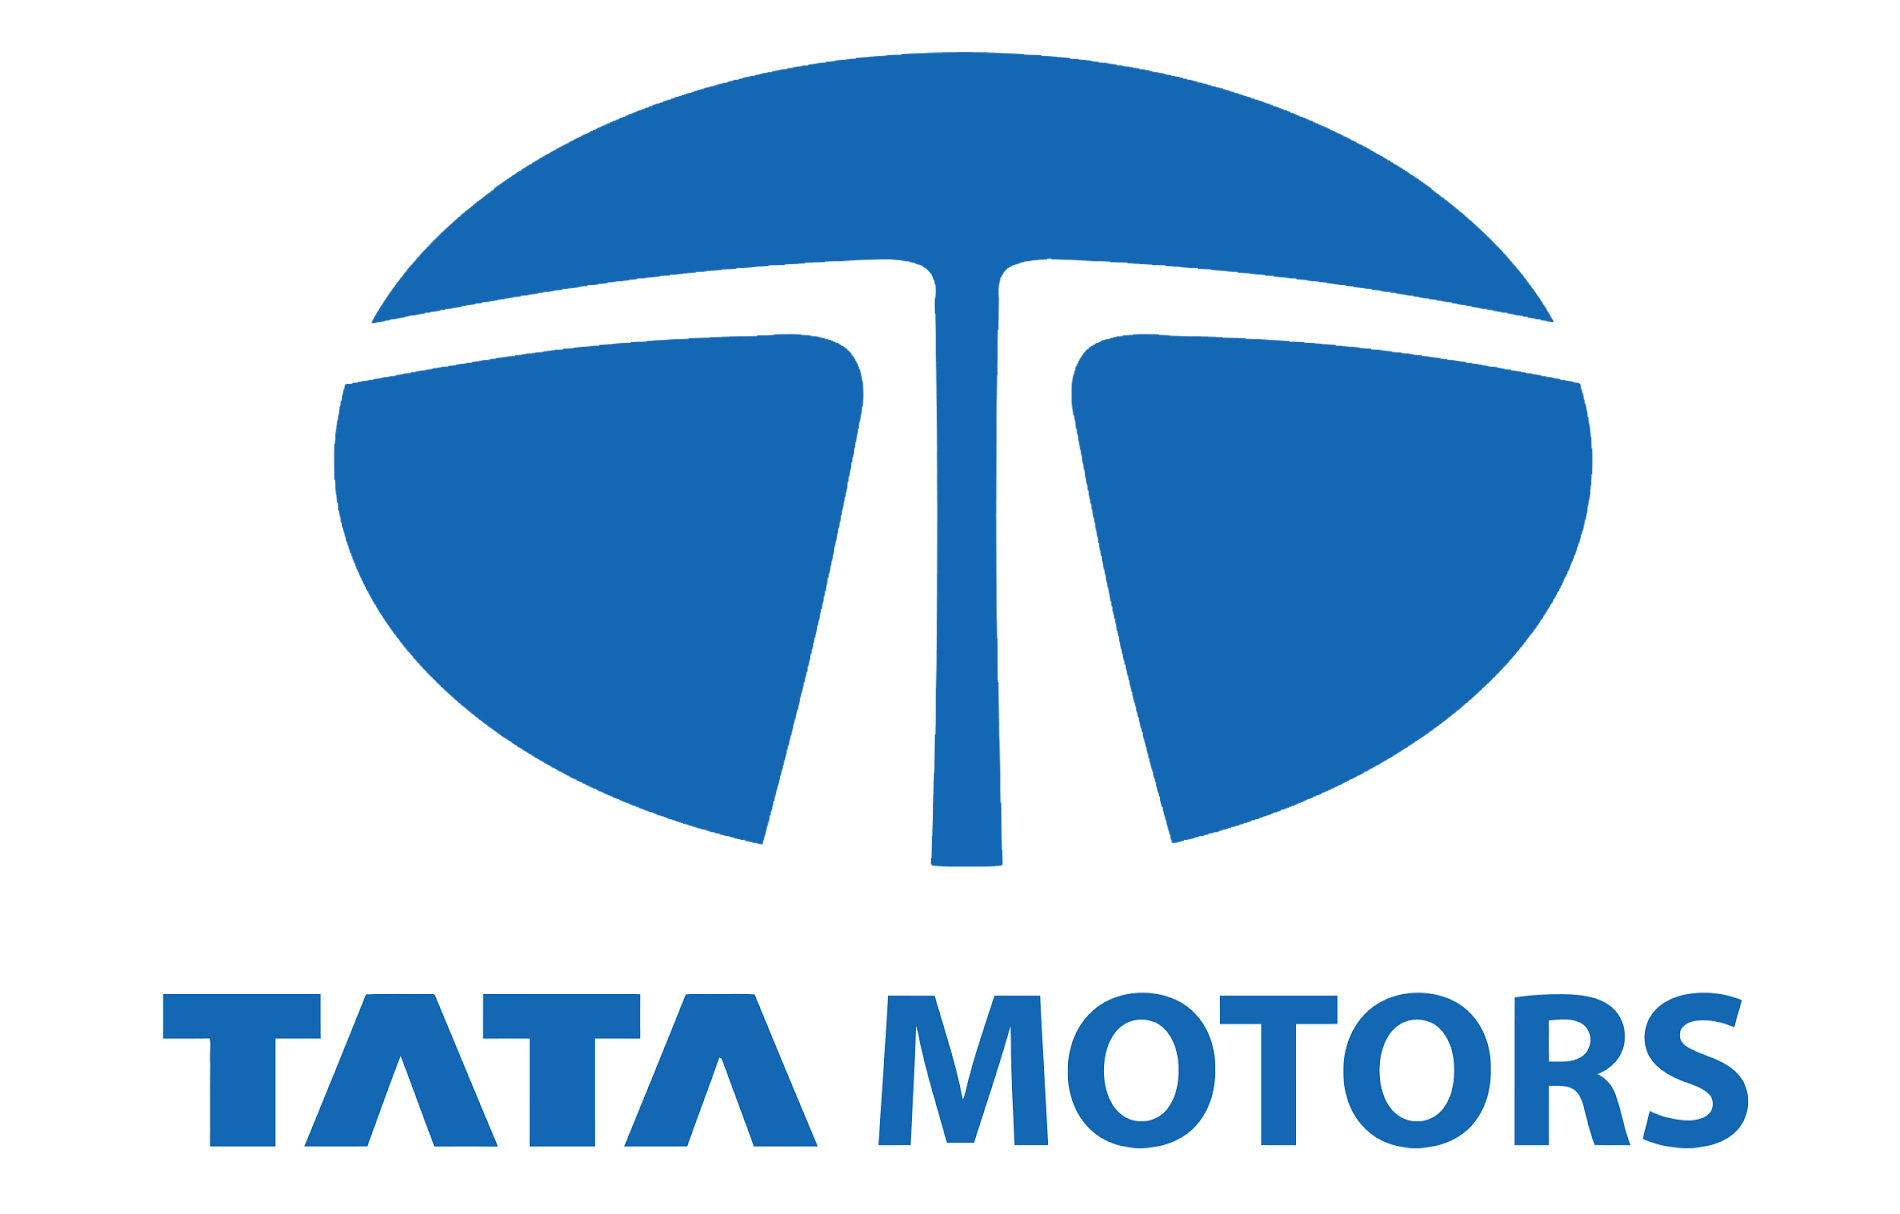 Tata Motors Cars Showroom - Ananya Motors|Show Room|Automotive